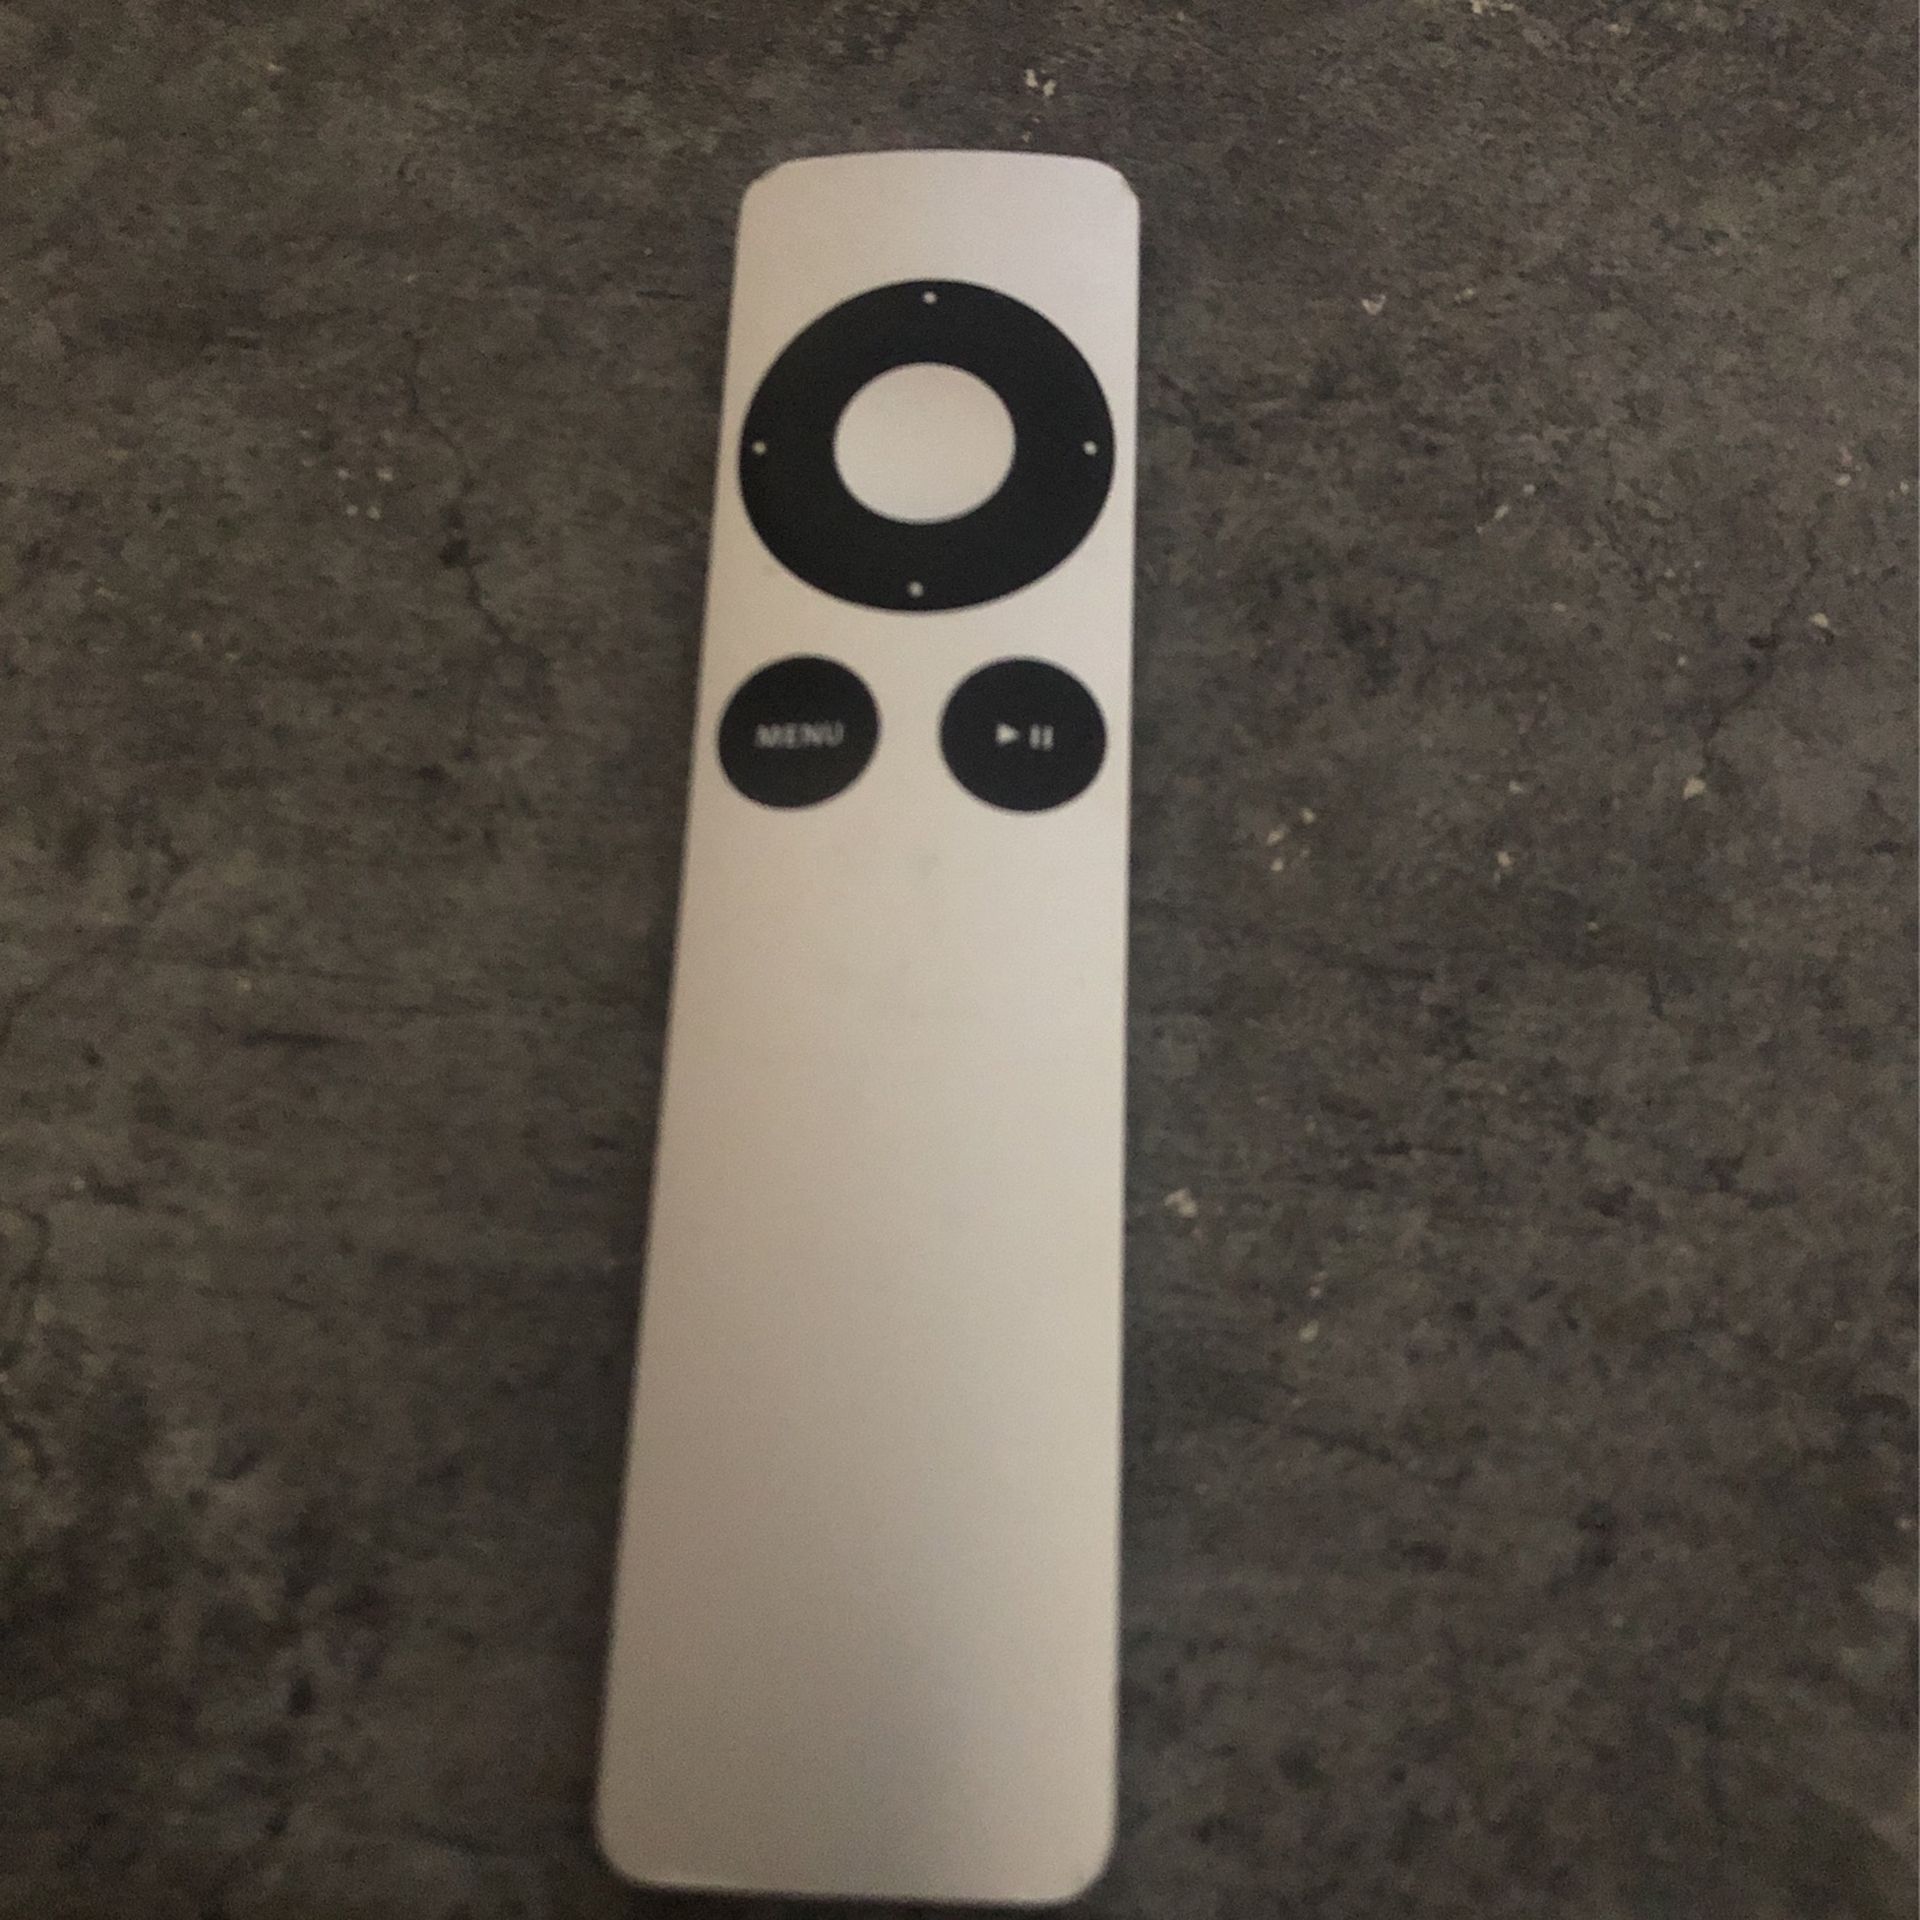 Apple TV -Remote 